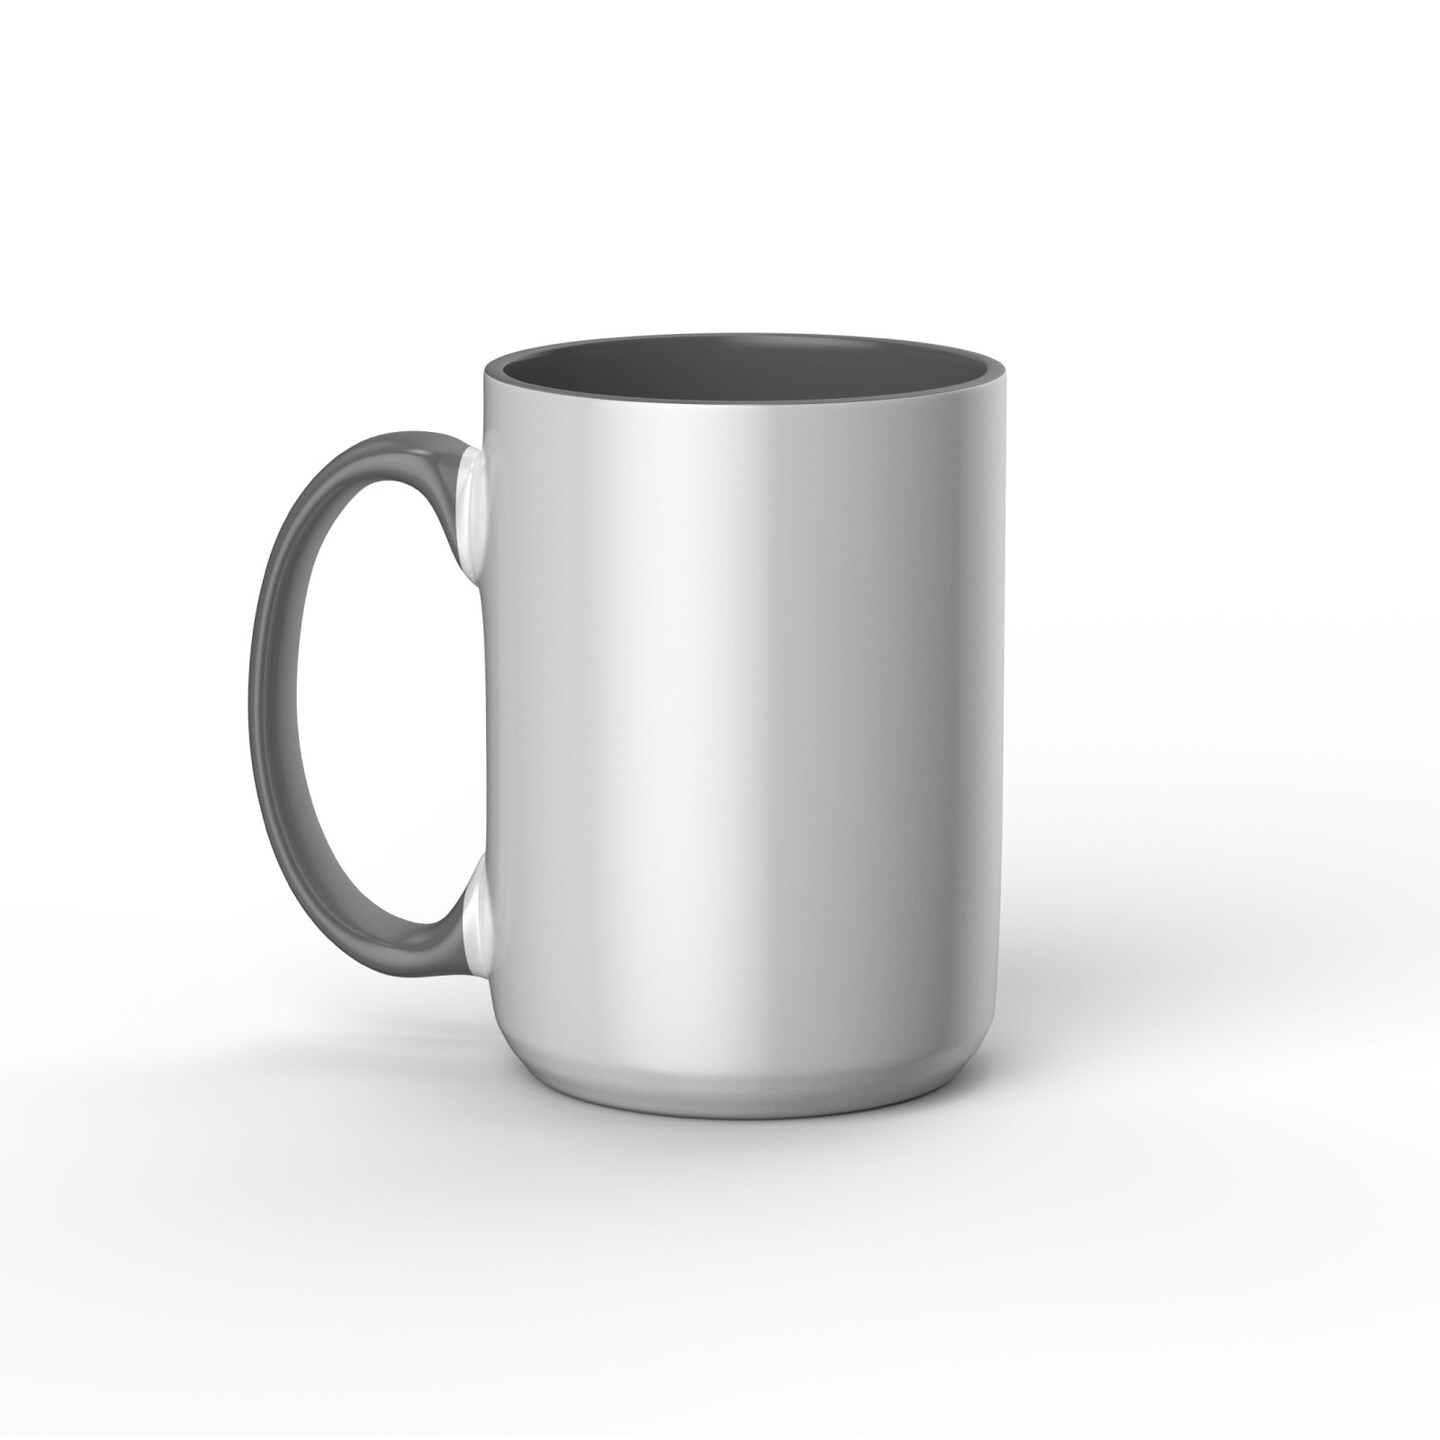 Cricut Beveled Ceramic Mug Blank - 15 oz/425 ml (1 ct)